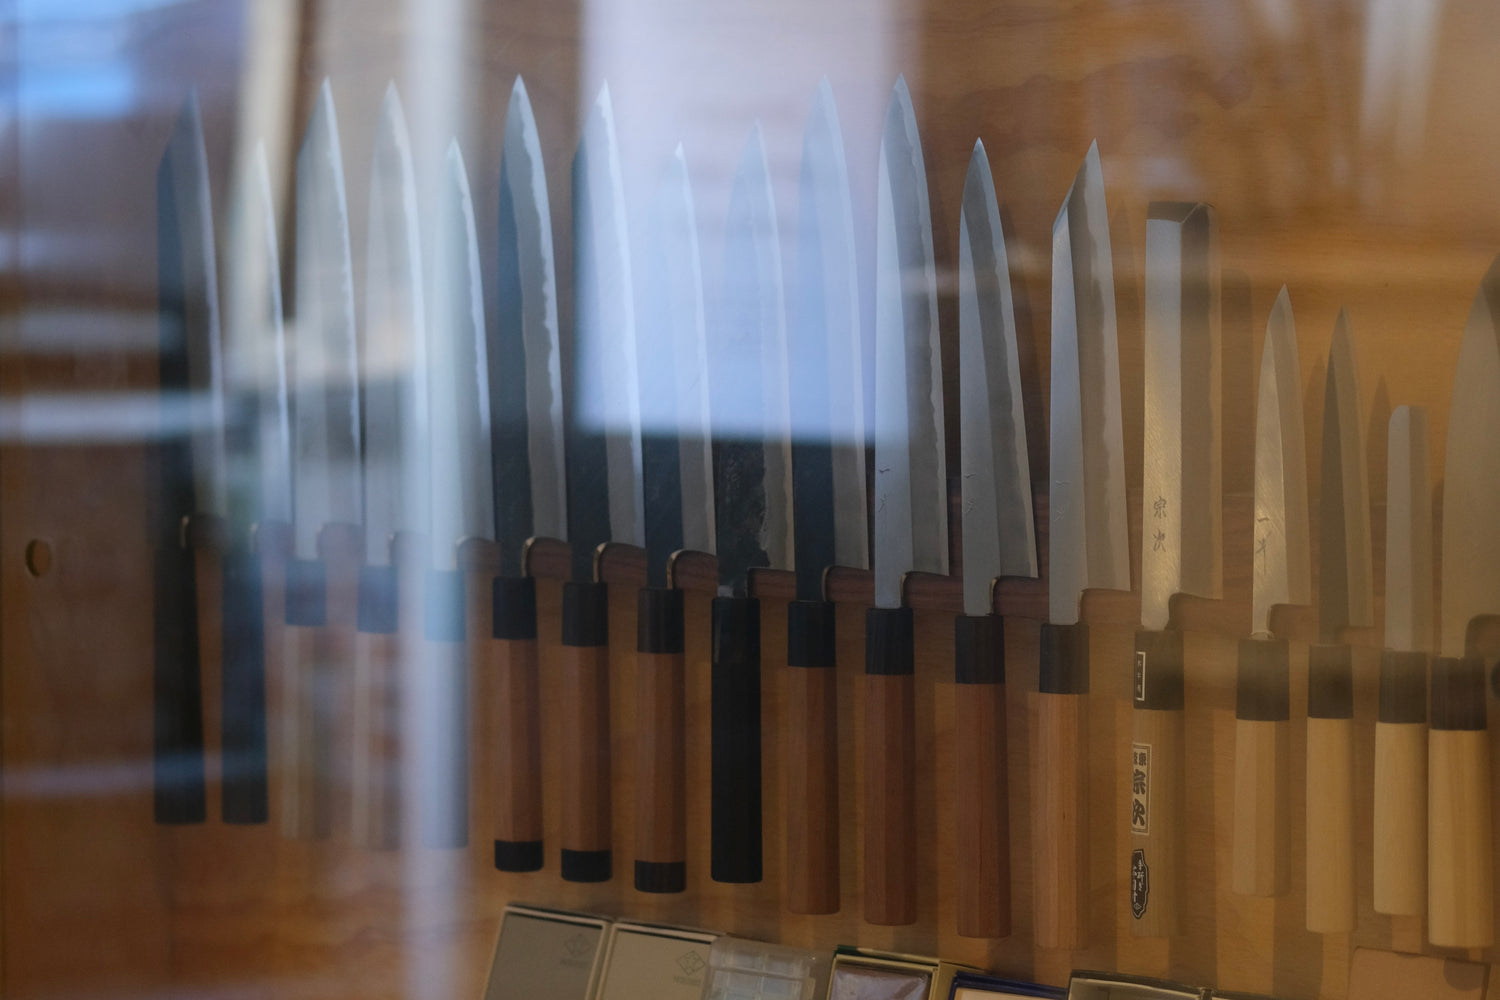 All Kitchen Knives